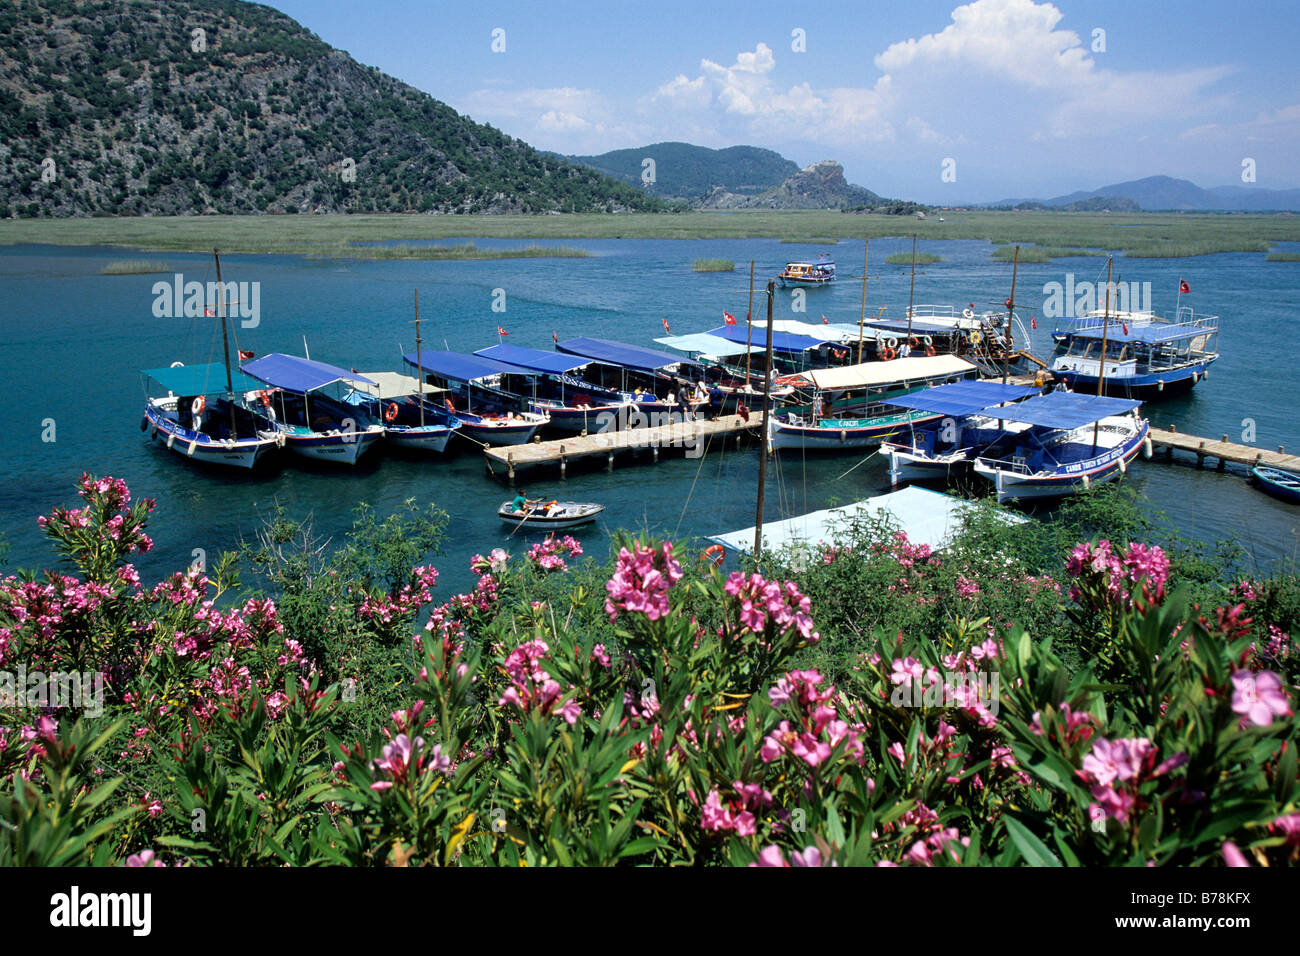 Boats on river, oleander in nature reserve, Iztuzu Beach, Turtle Beach, Daylan, Mugla Province, Mediterranean, Turkey Stock Photo